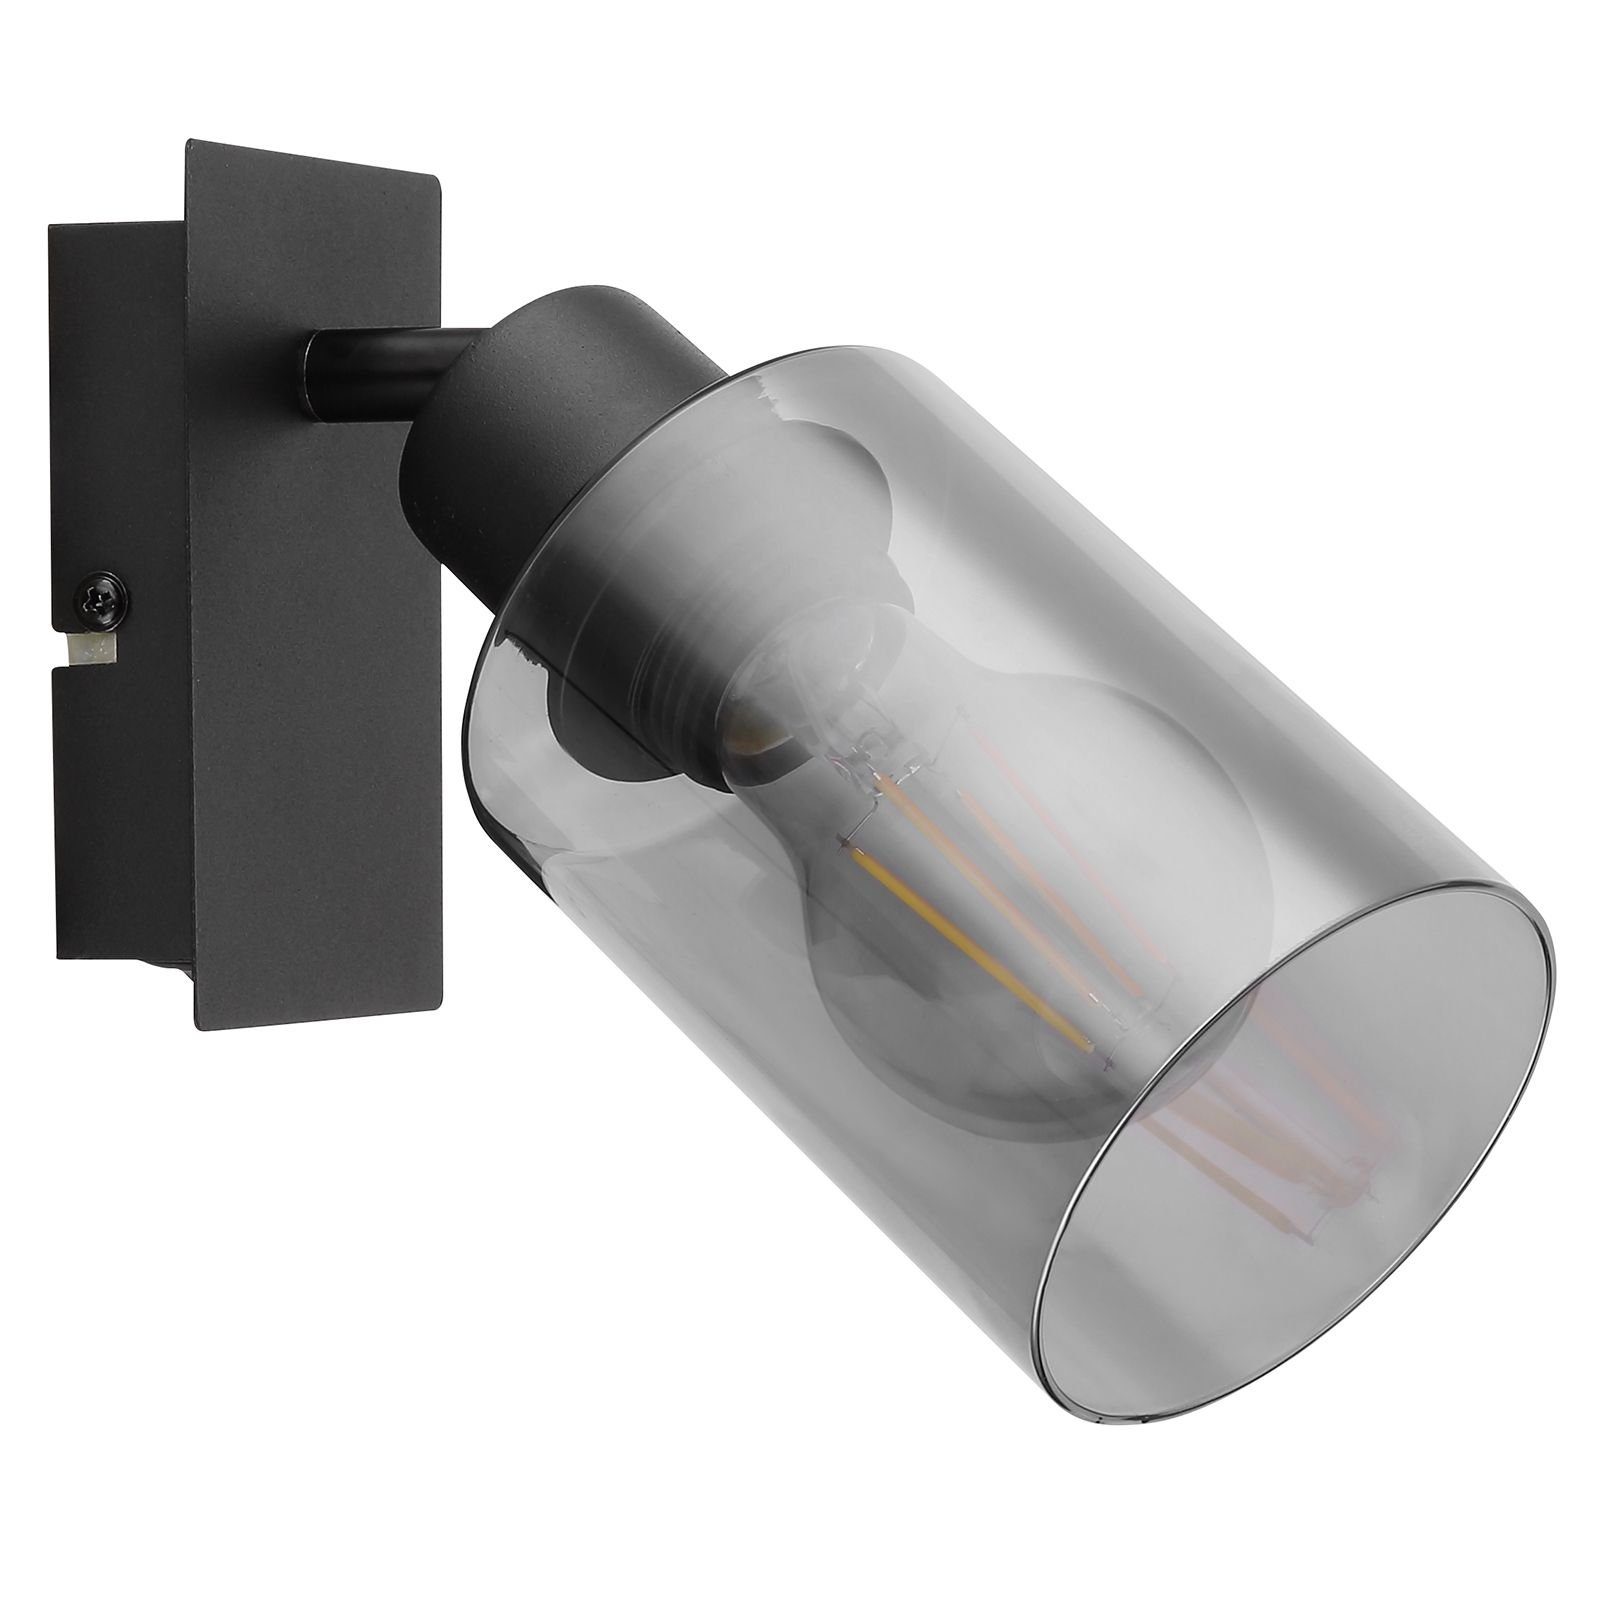 Rauchglas Globo Schwarz Industrie Wandleuchte Innen GLOBO Wandleuchte Wandlampe Optik